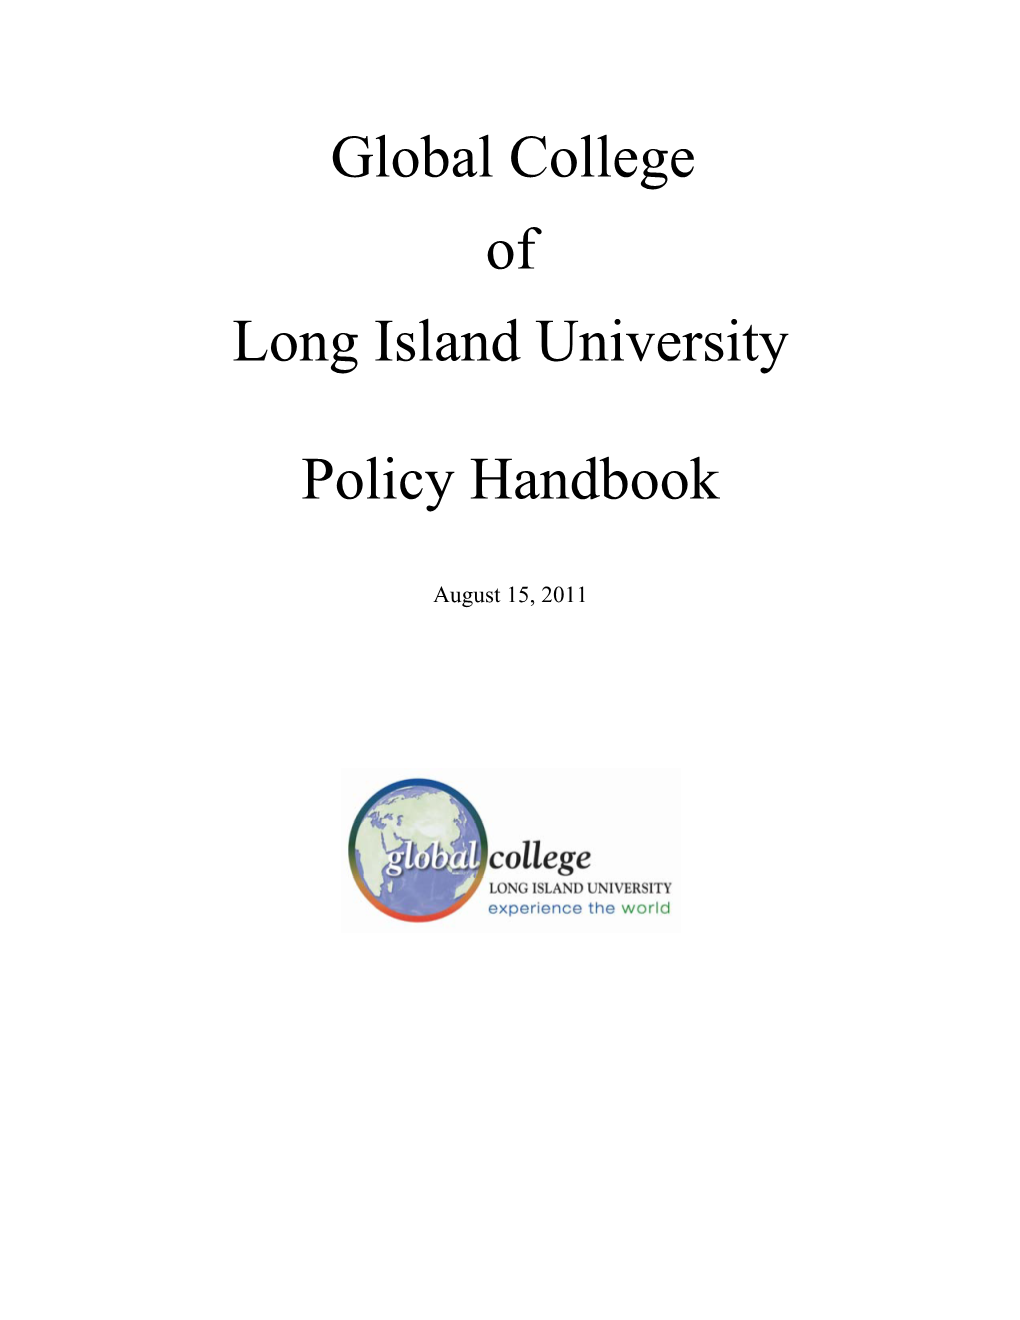 Global College of Long Island University Policy Handbook